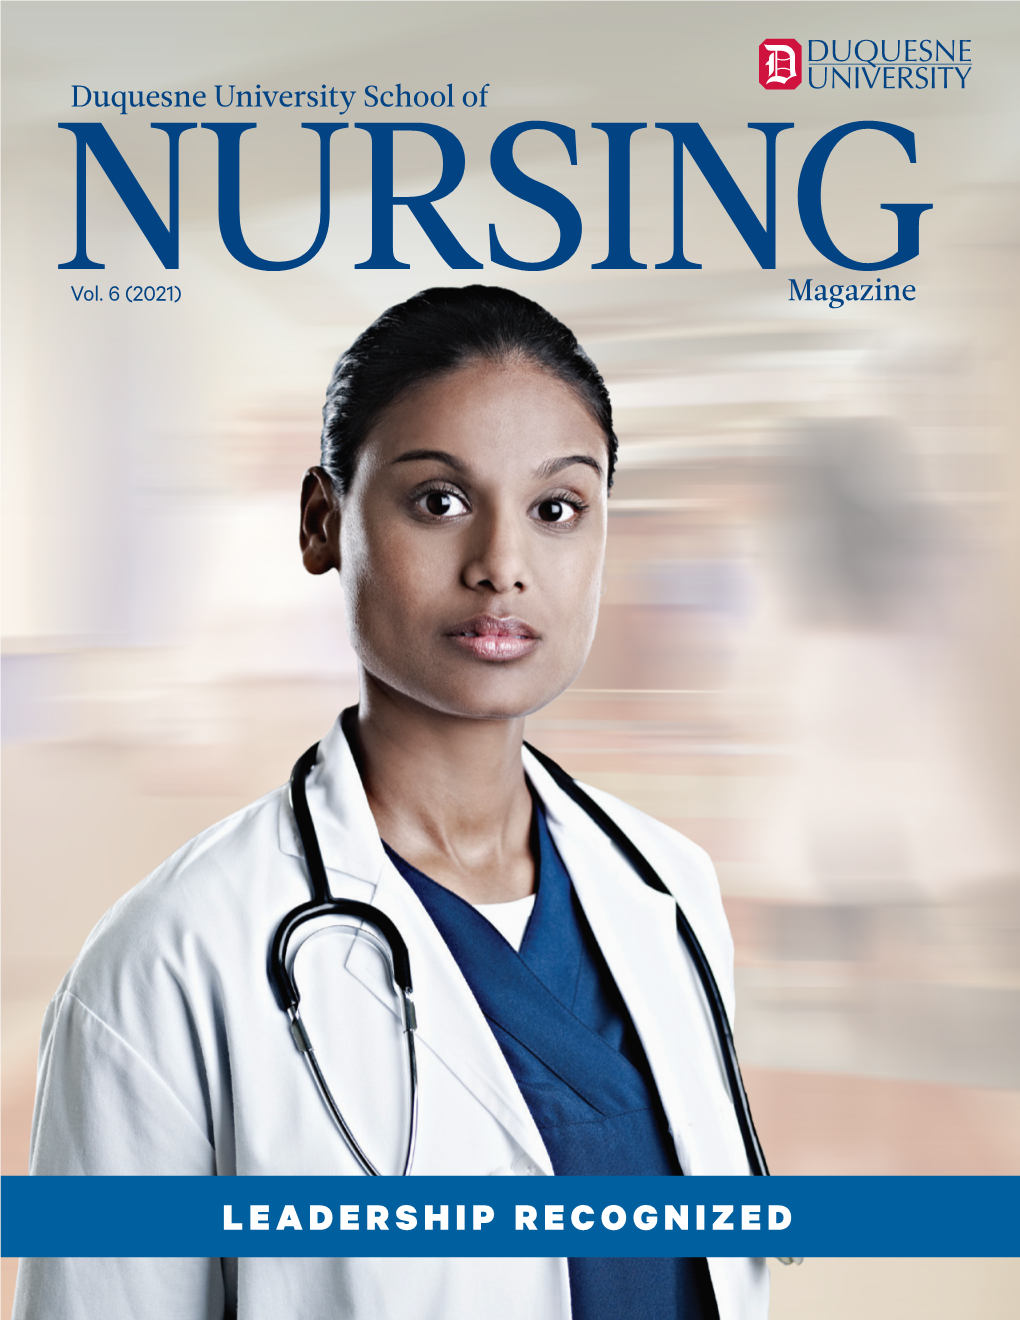 Duquesne University School of Nursing Magazine